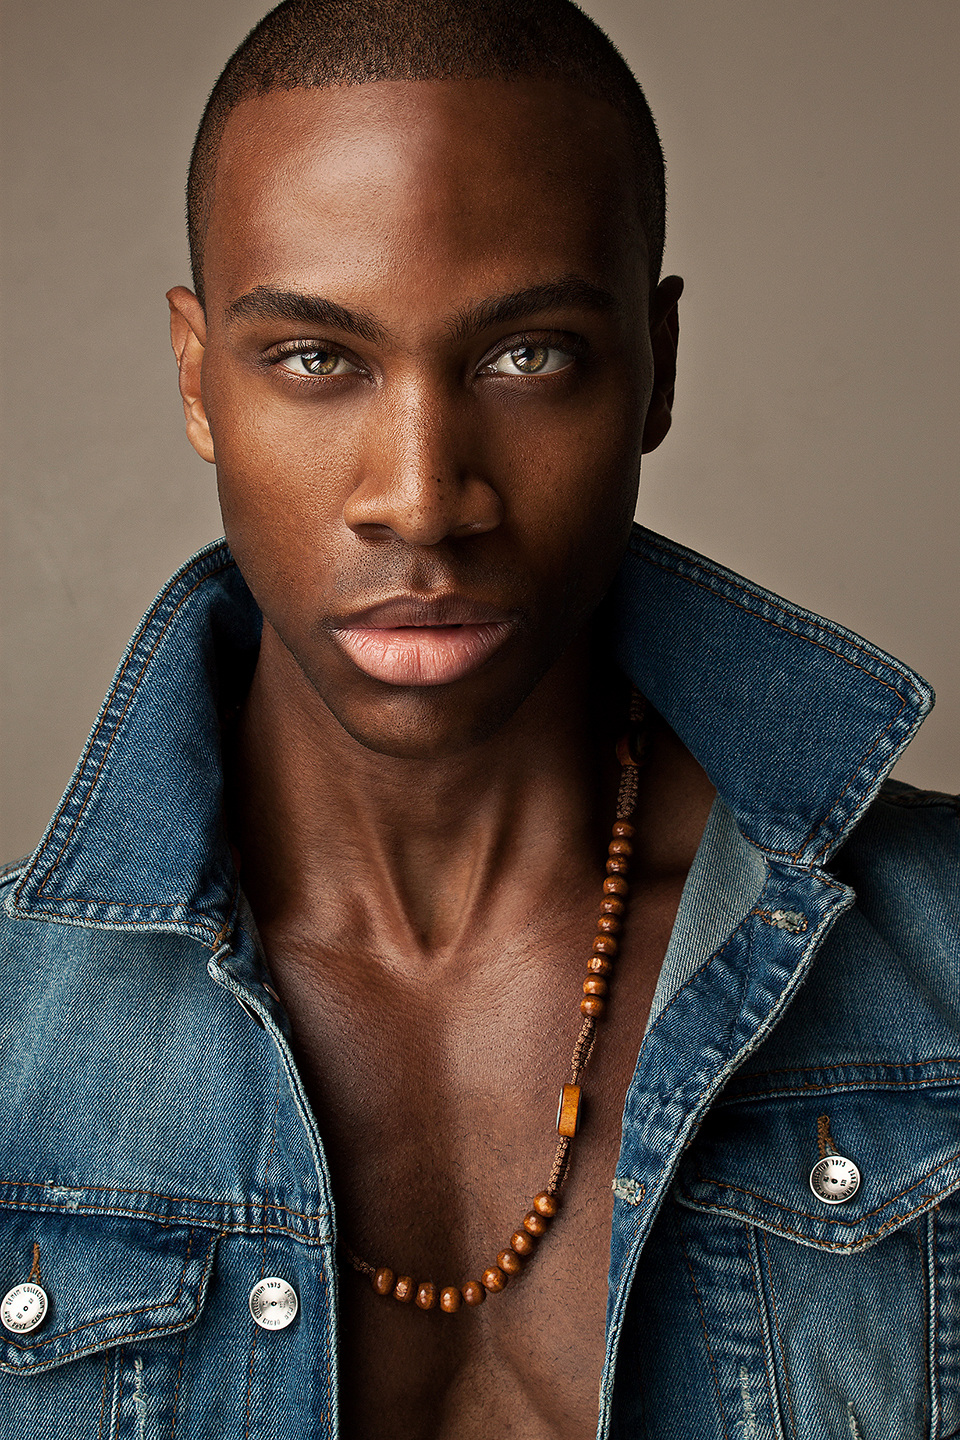 Black male model beauty, fashion, style, magazine editorial.retouch.jpg